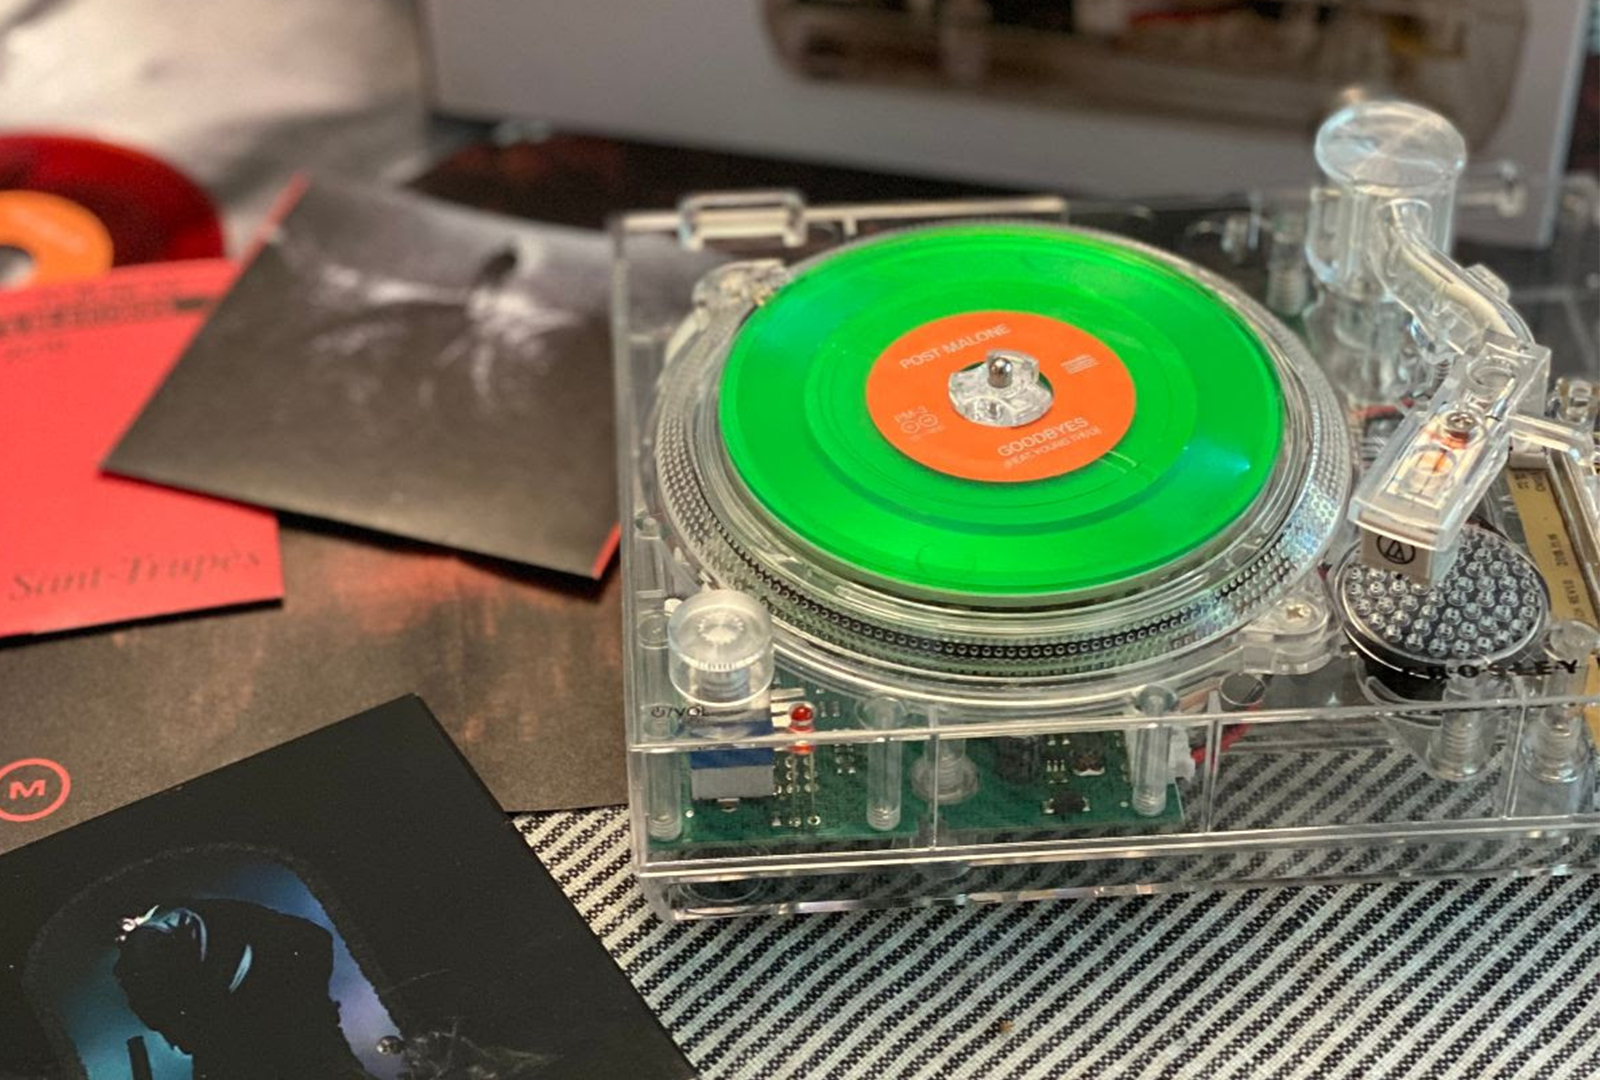 RSD3 Mini Turntable — One Groove Vinyl - One Off Lathe Cut Vinyl